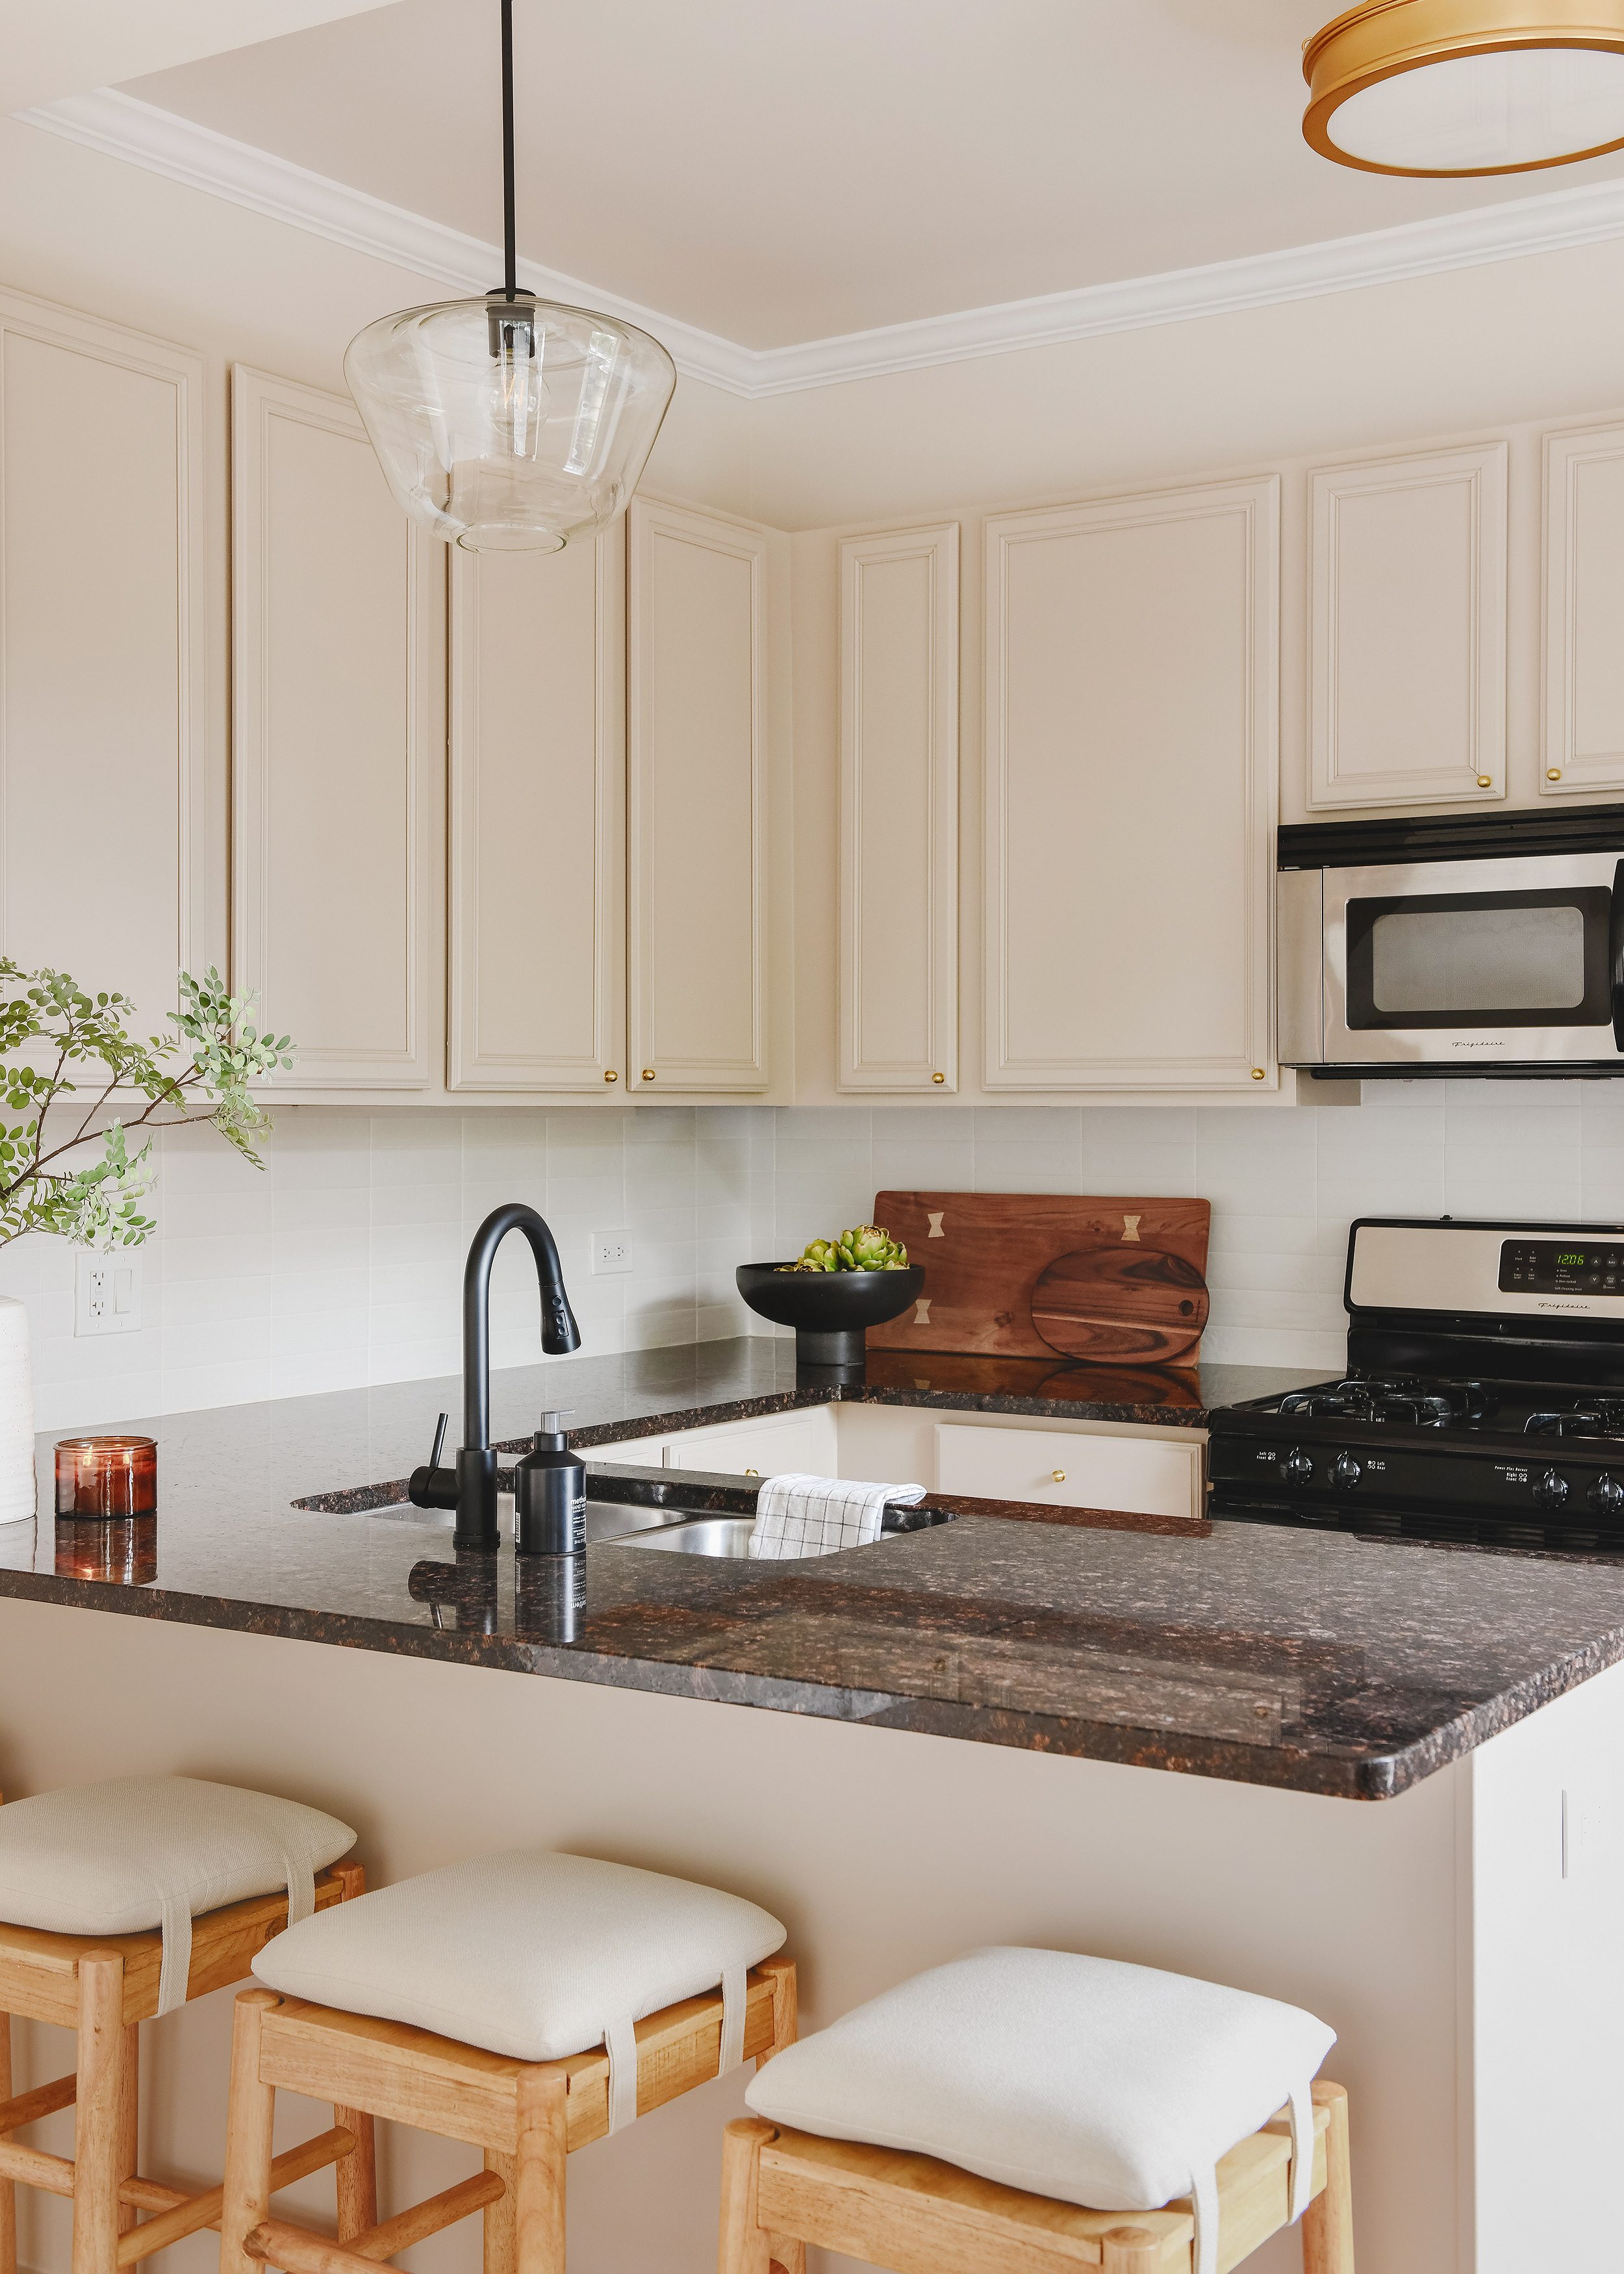 taupe kitchen cabinets, granite countertops and neutral decor | small space kitchen ideas | via Yellow Brick Home